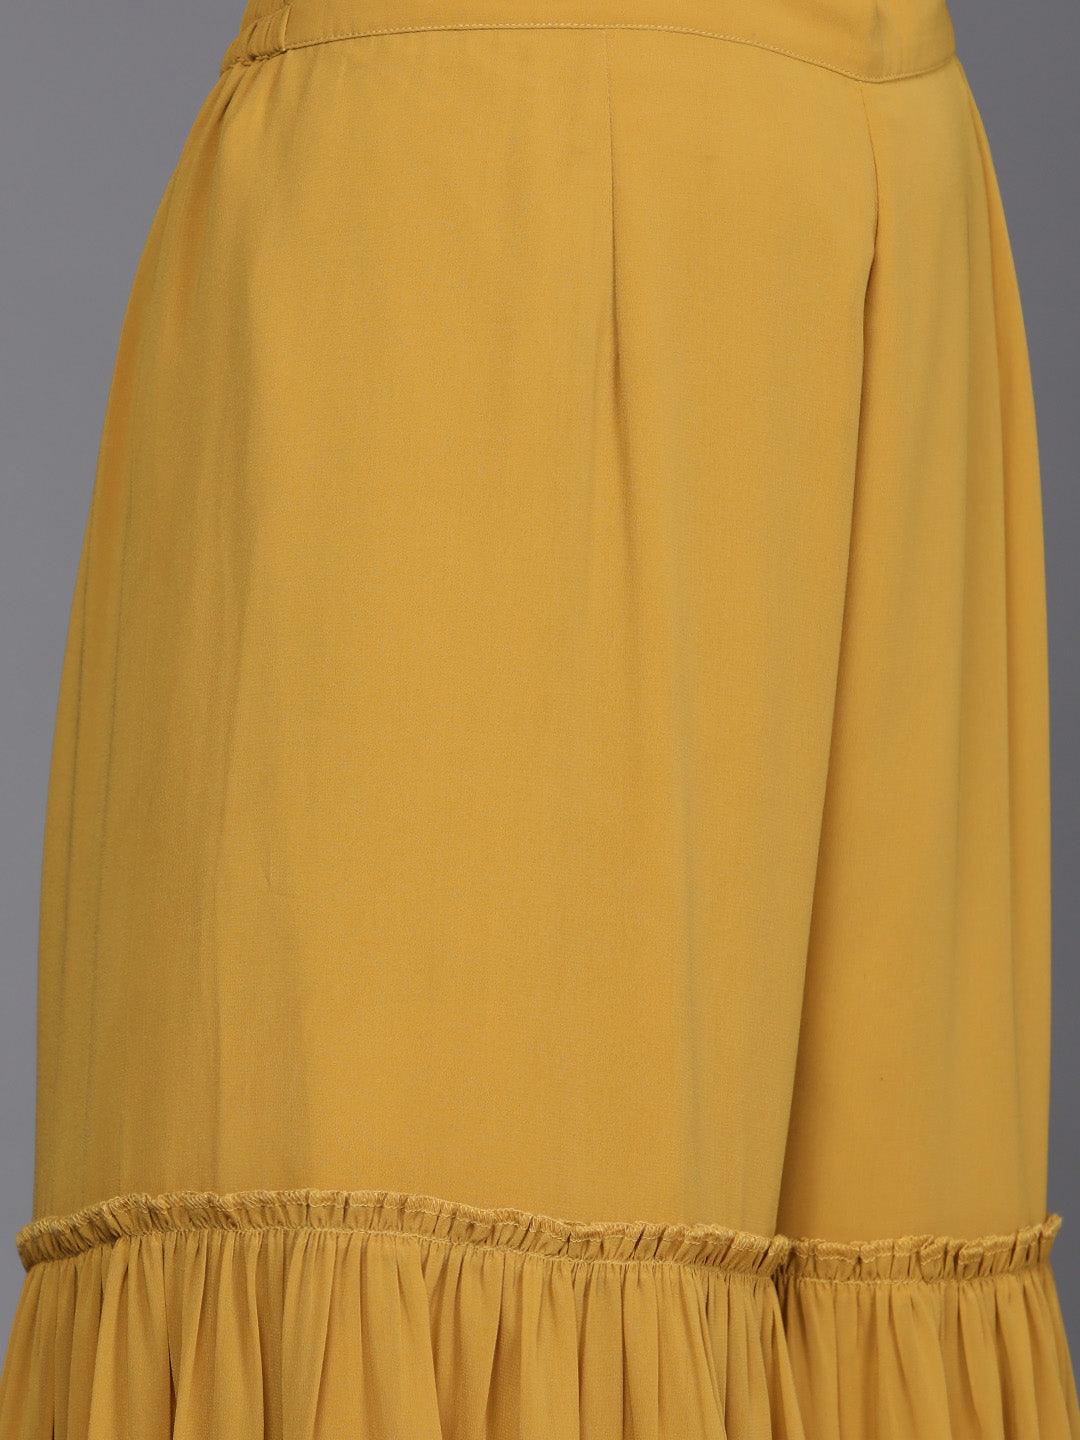 Mustard Sequinned Georgette Straight Sharara Suit Set With Potli - Libas